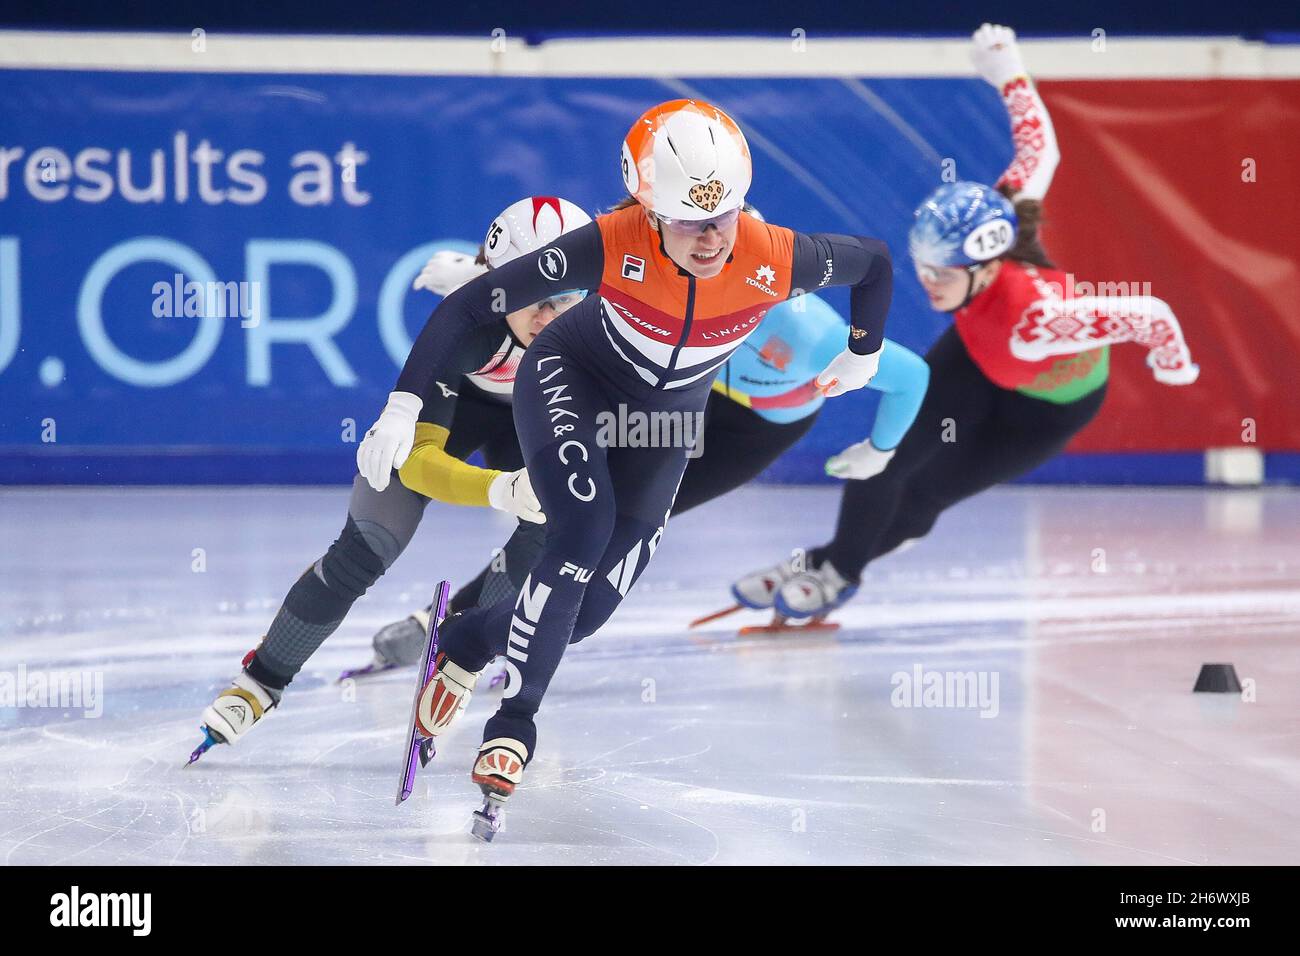 DEBRECEN, HUNGARY - NOVEMBER 18: Yara van Kerkhof of The Netherlands  competing during the ISU World Cup Short Track Speed Skating at Fonix Arena  on November 18, 2021 in Debrecen, Hungary (Photo